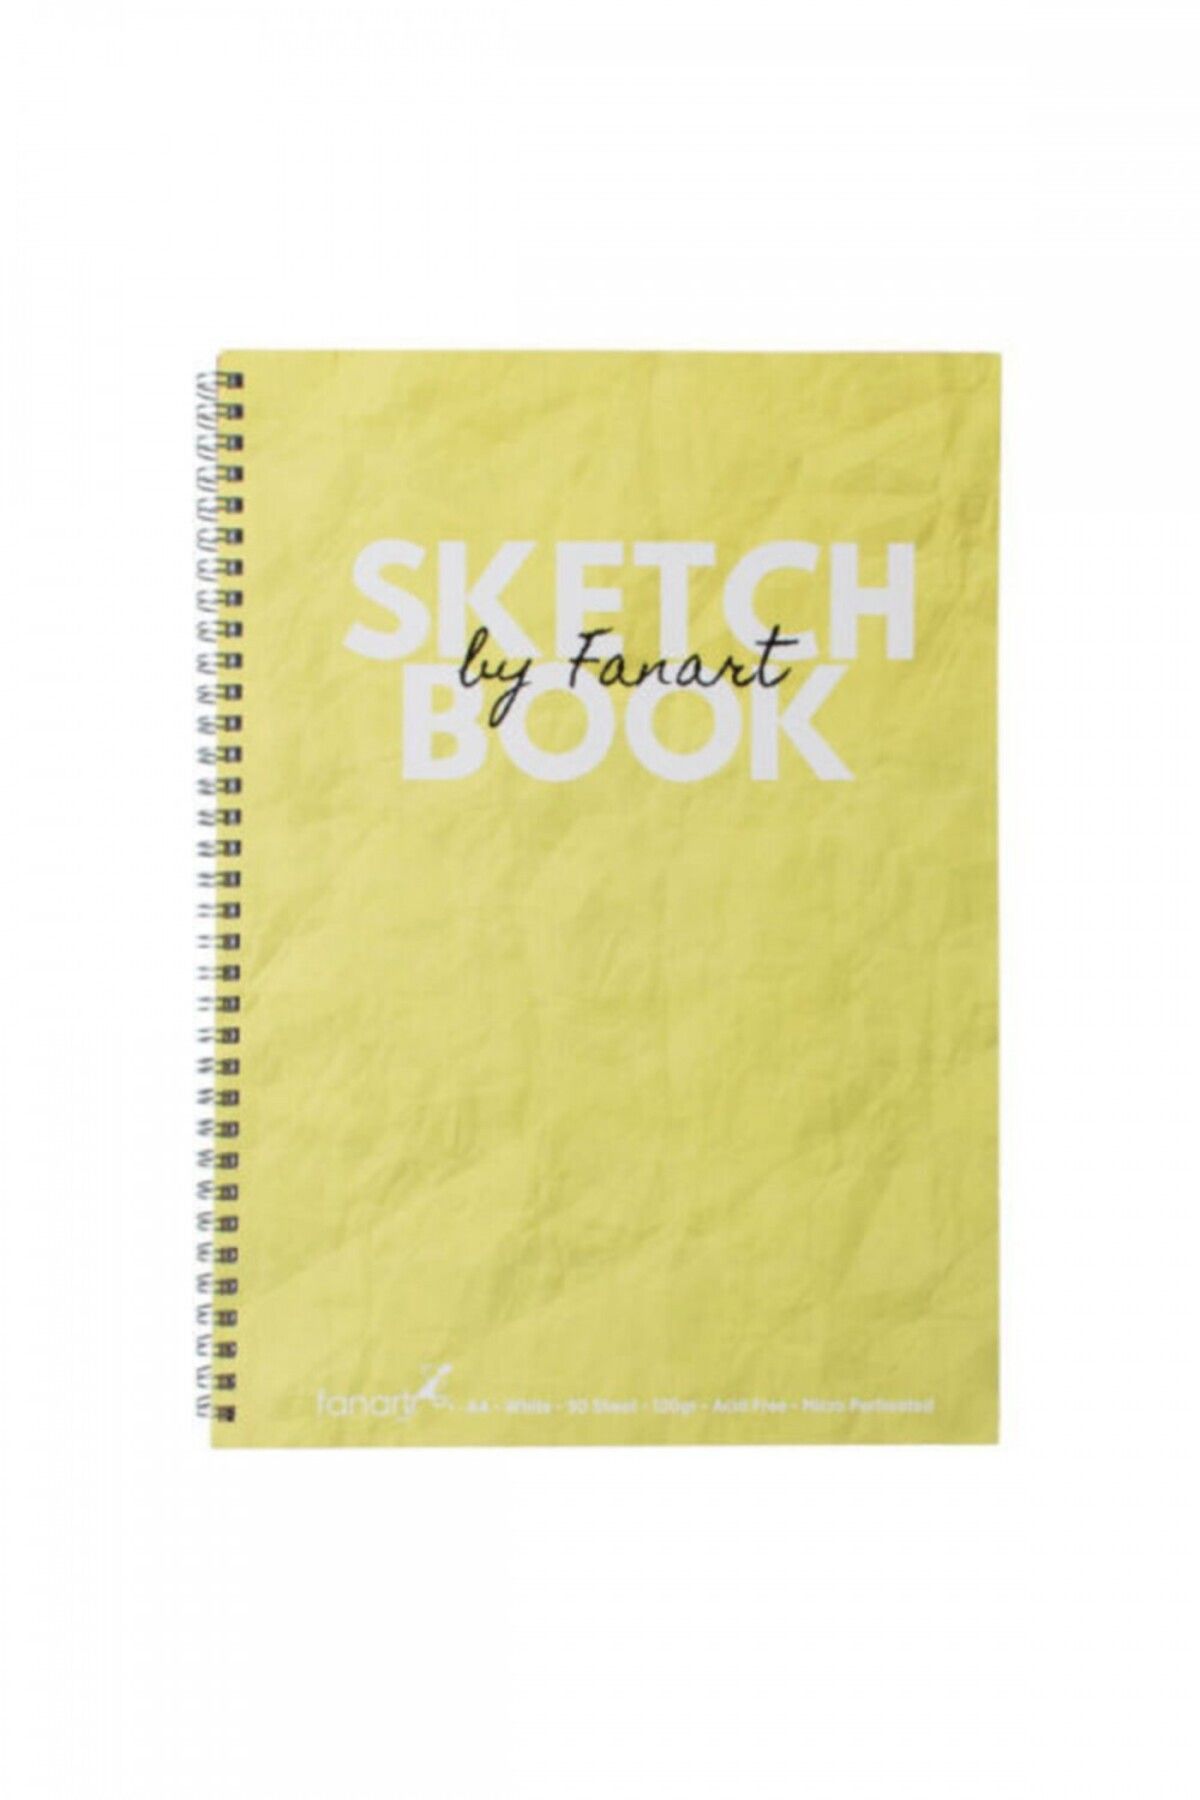 Fanart Sketch Book (ESKİZ DEFTERİ) A4 Spiralli 120 gr Beyaz Kağıt- Sarı